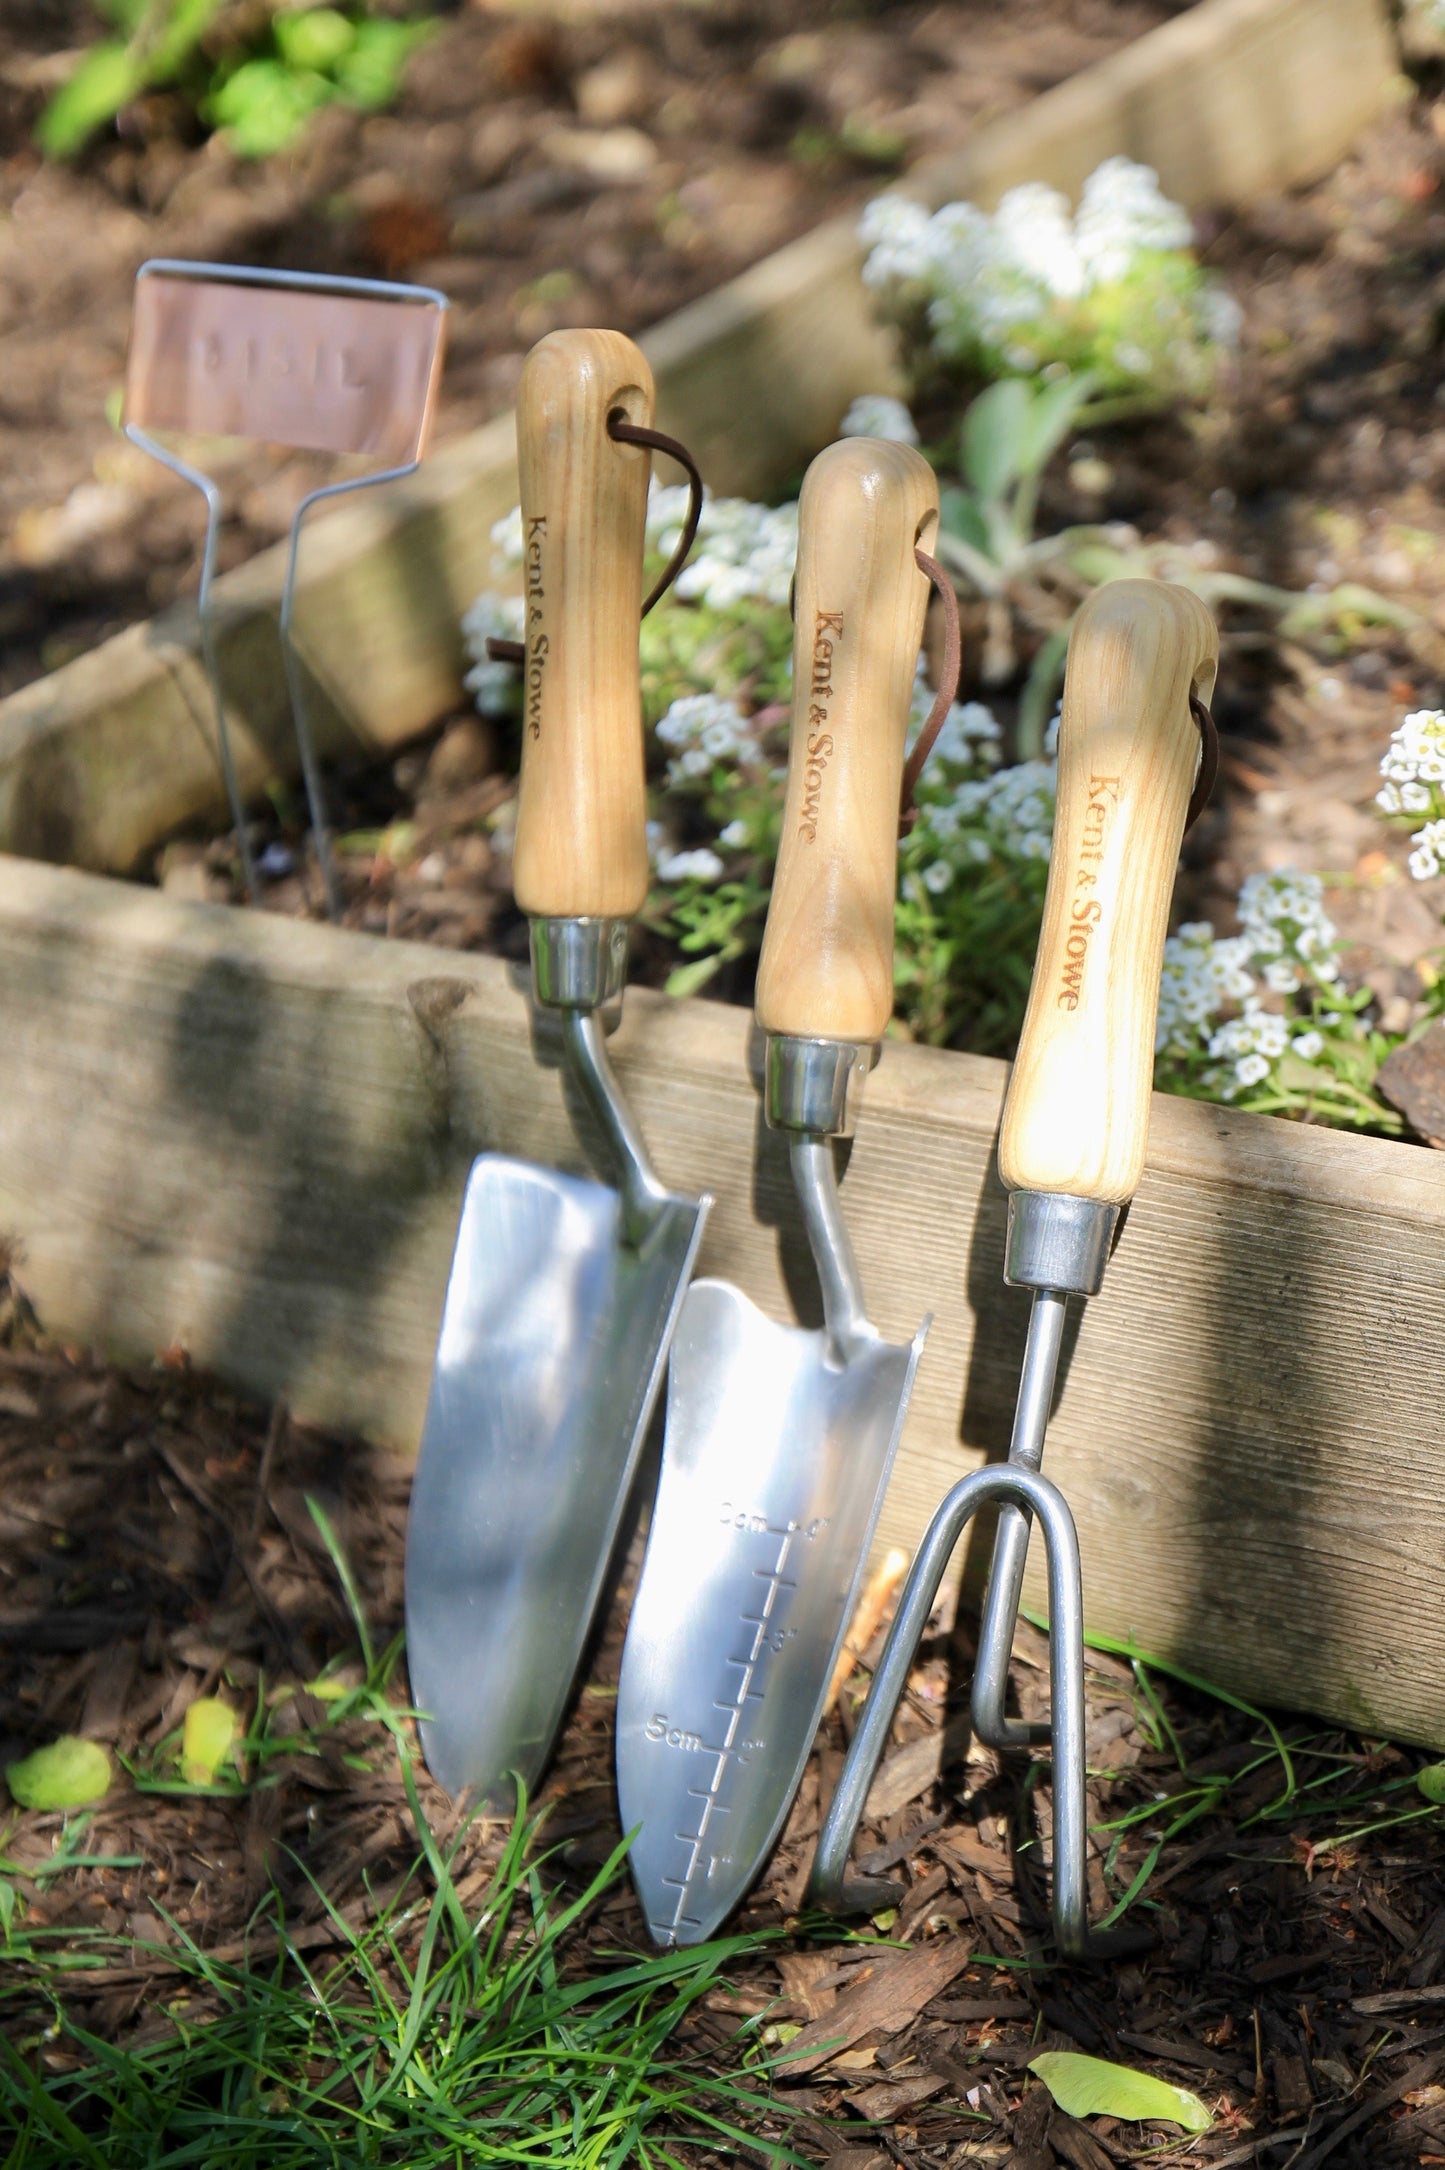 Kent & Stowe Garden Tools – JSH Home Essentials